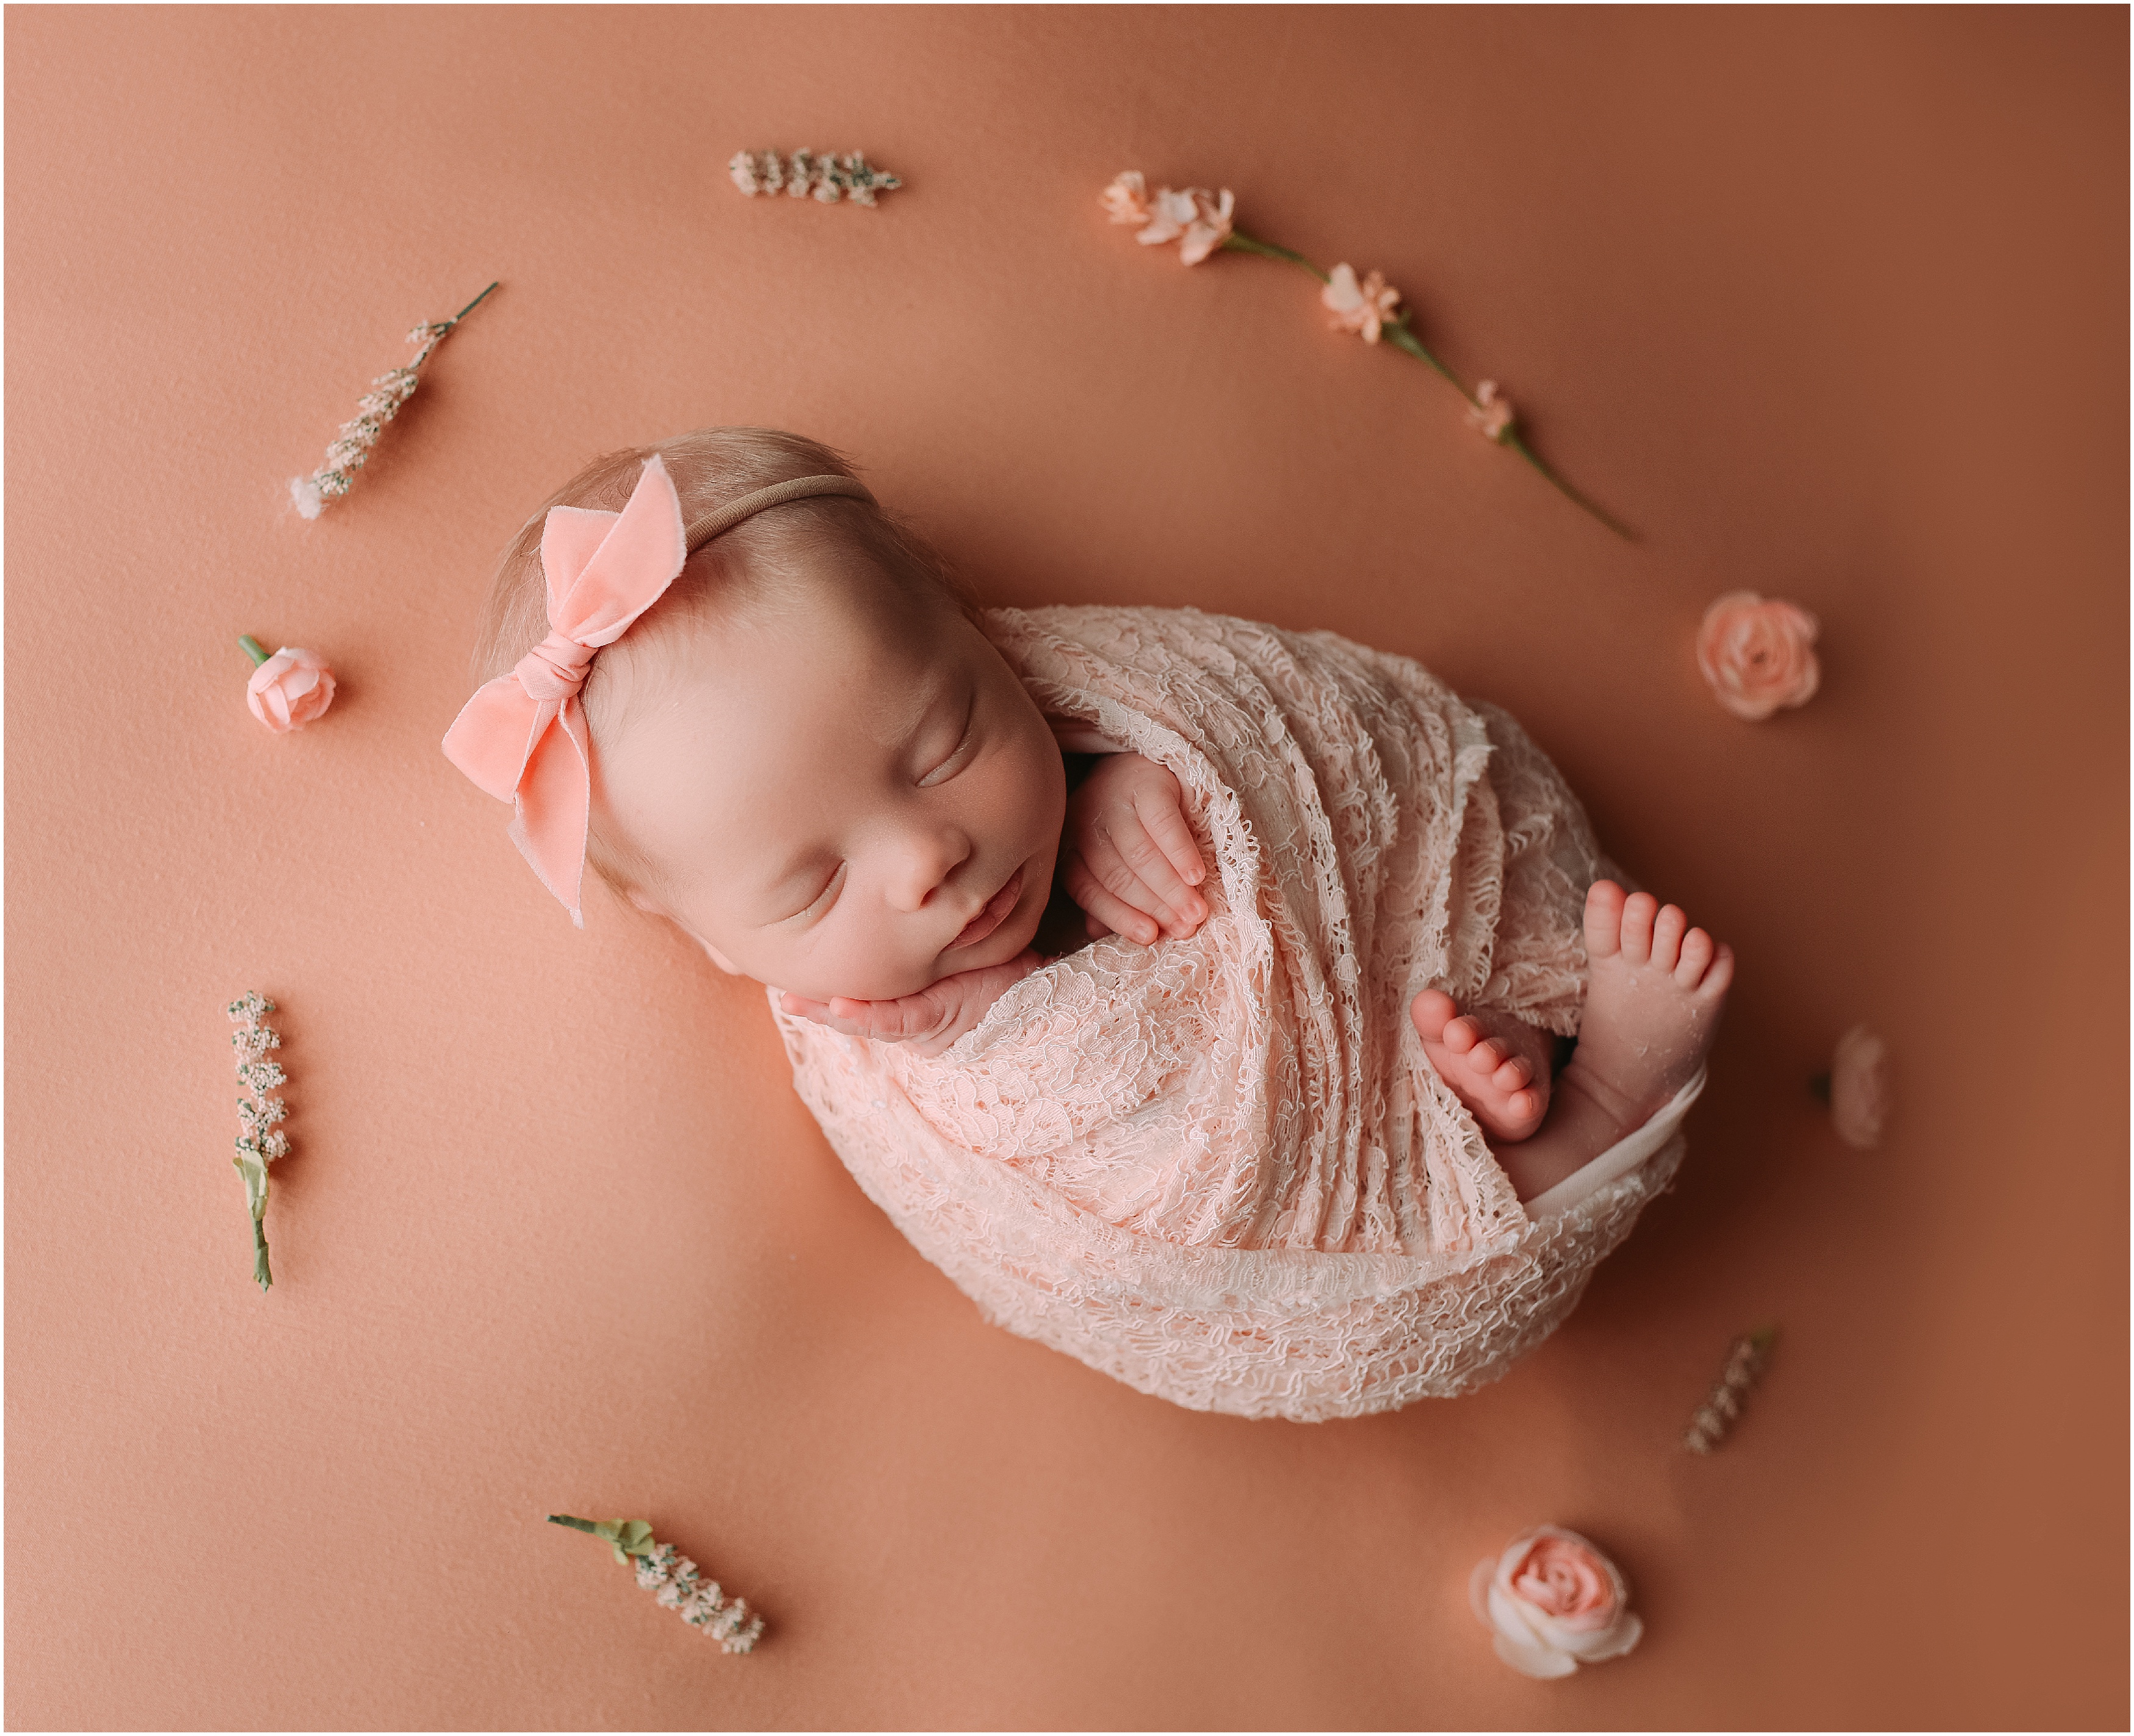 New Braunfels Newborn Baby Photography Studio